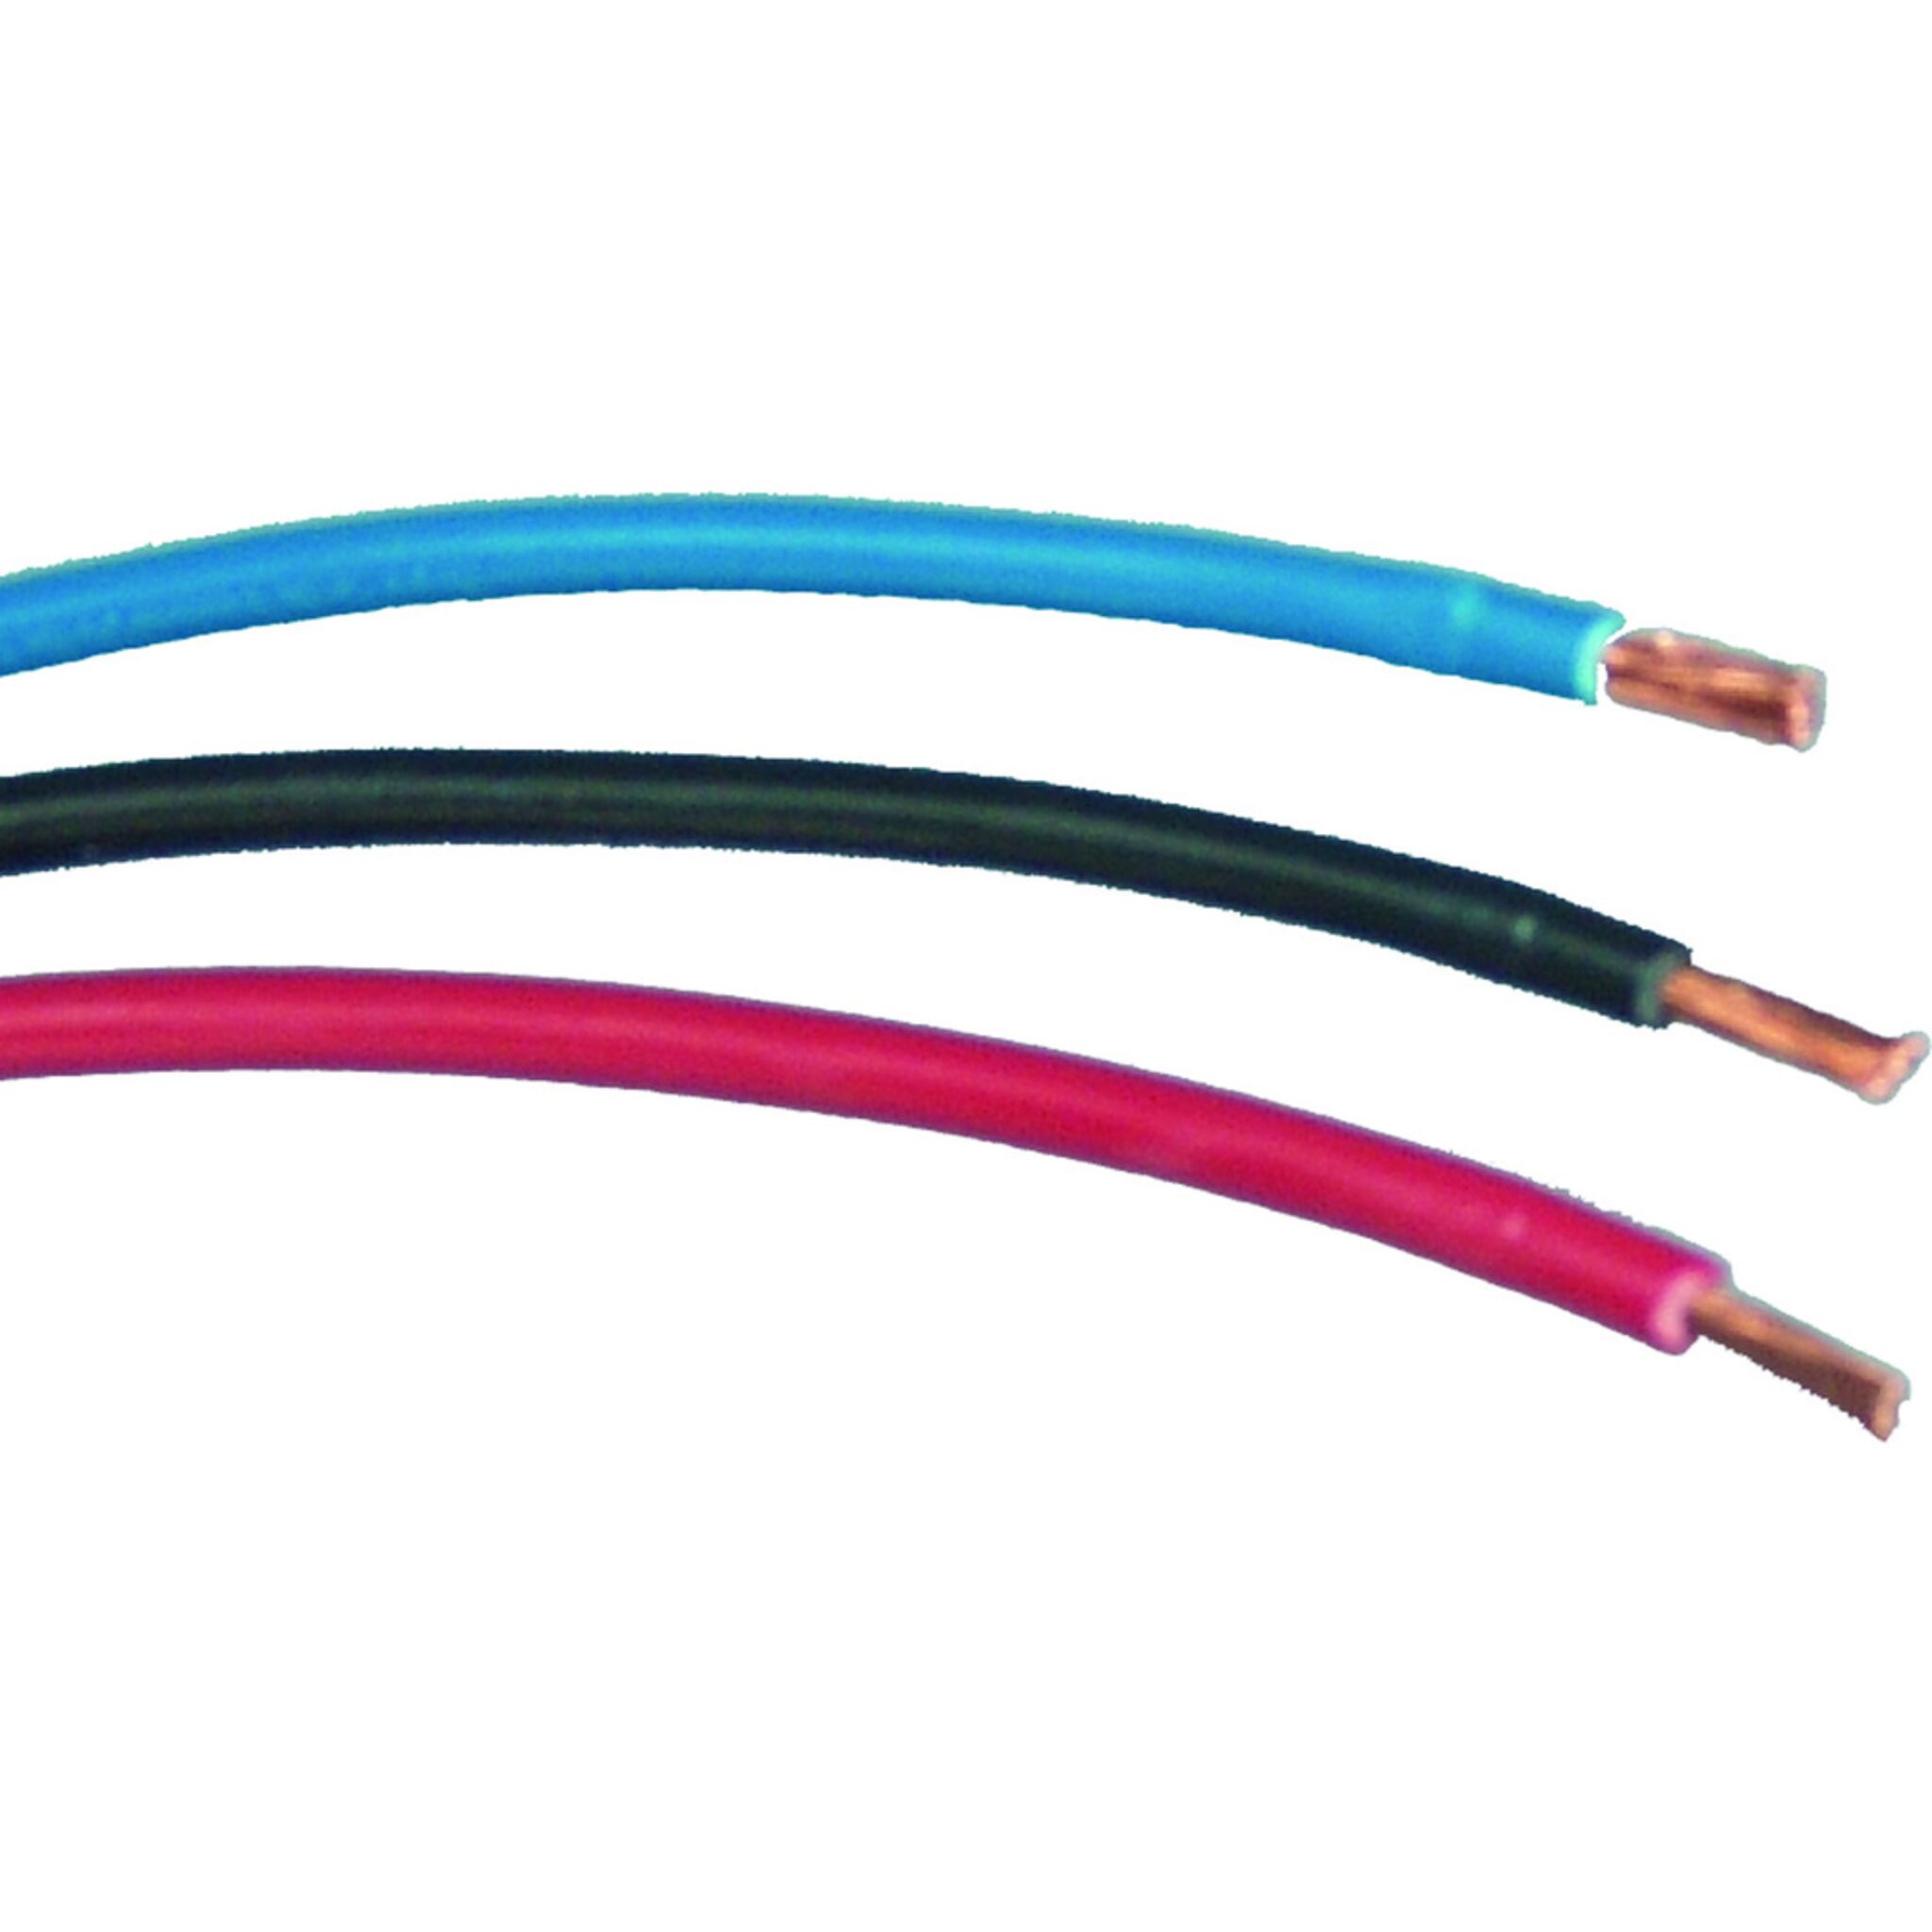 Automotive cable, single core, 10 meters